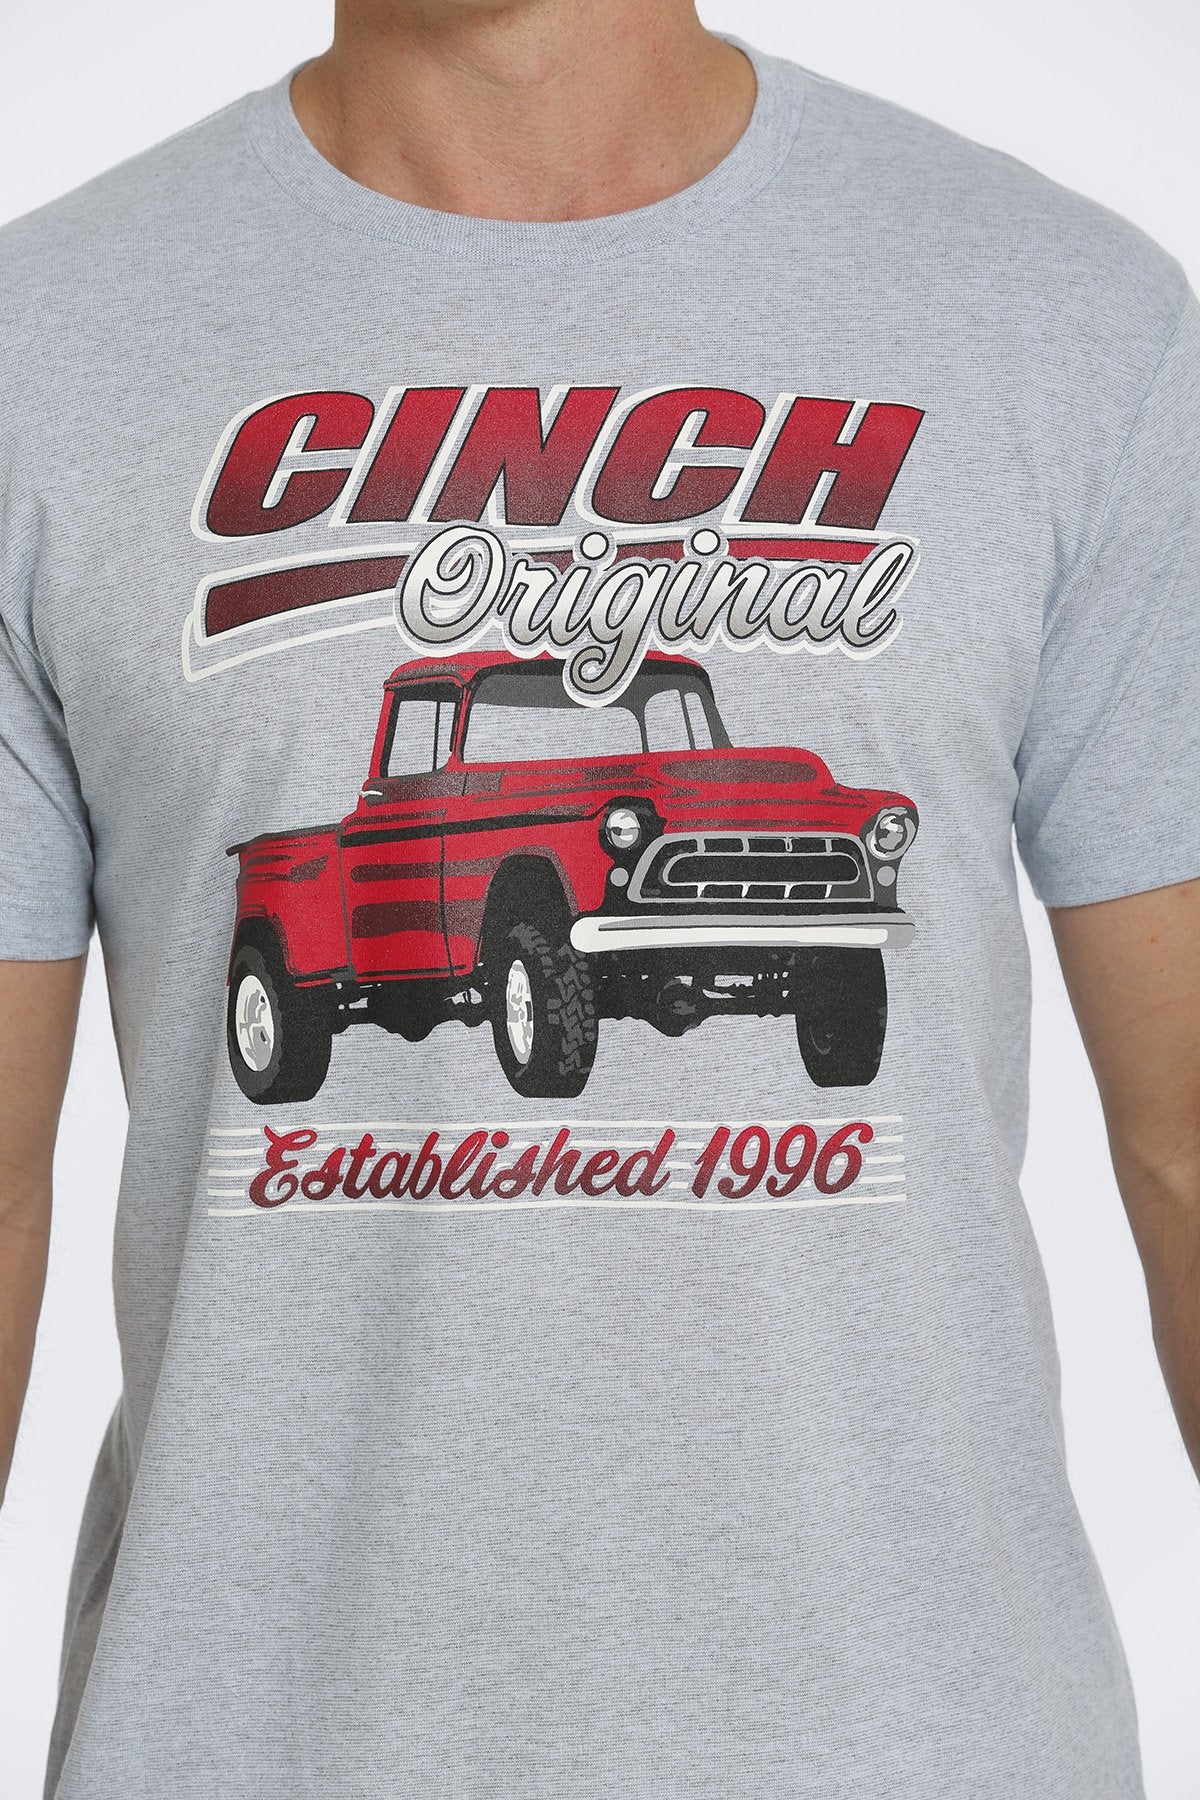 The Cinch Original Truck Graphic Tee